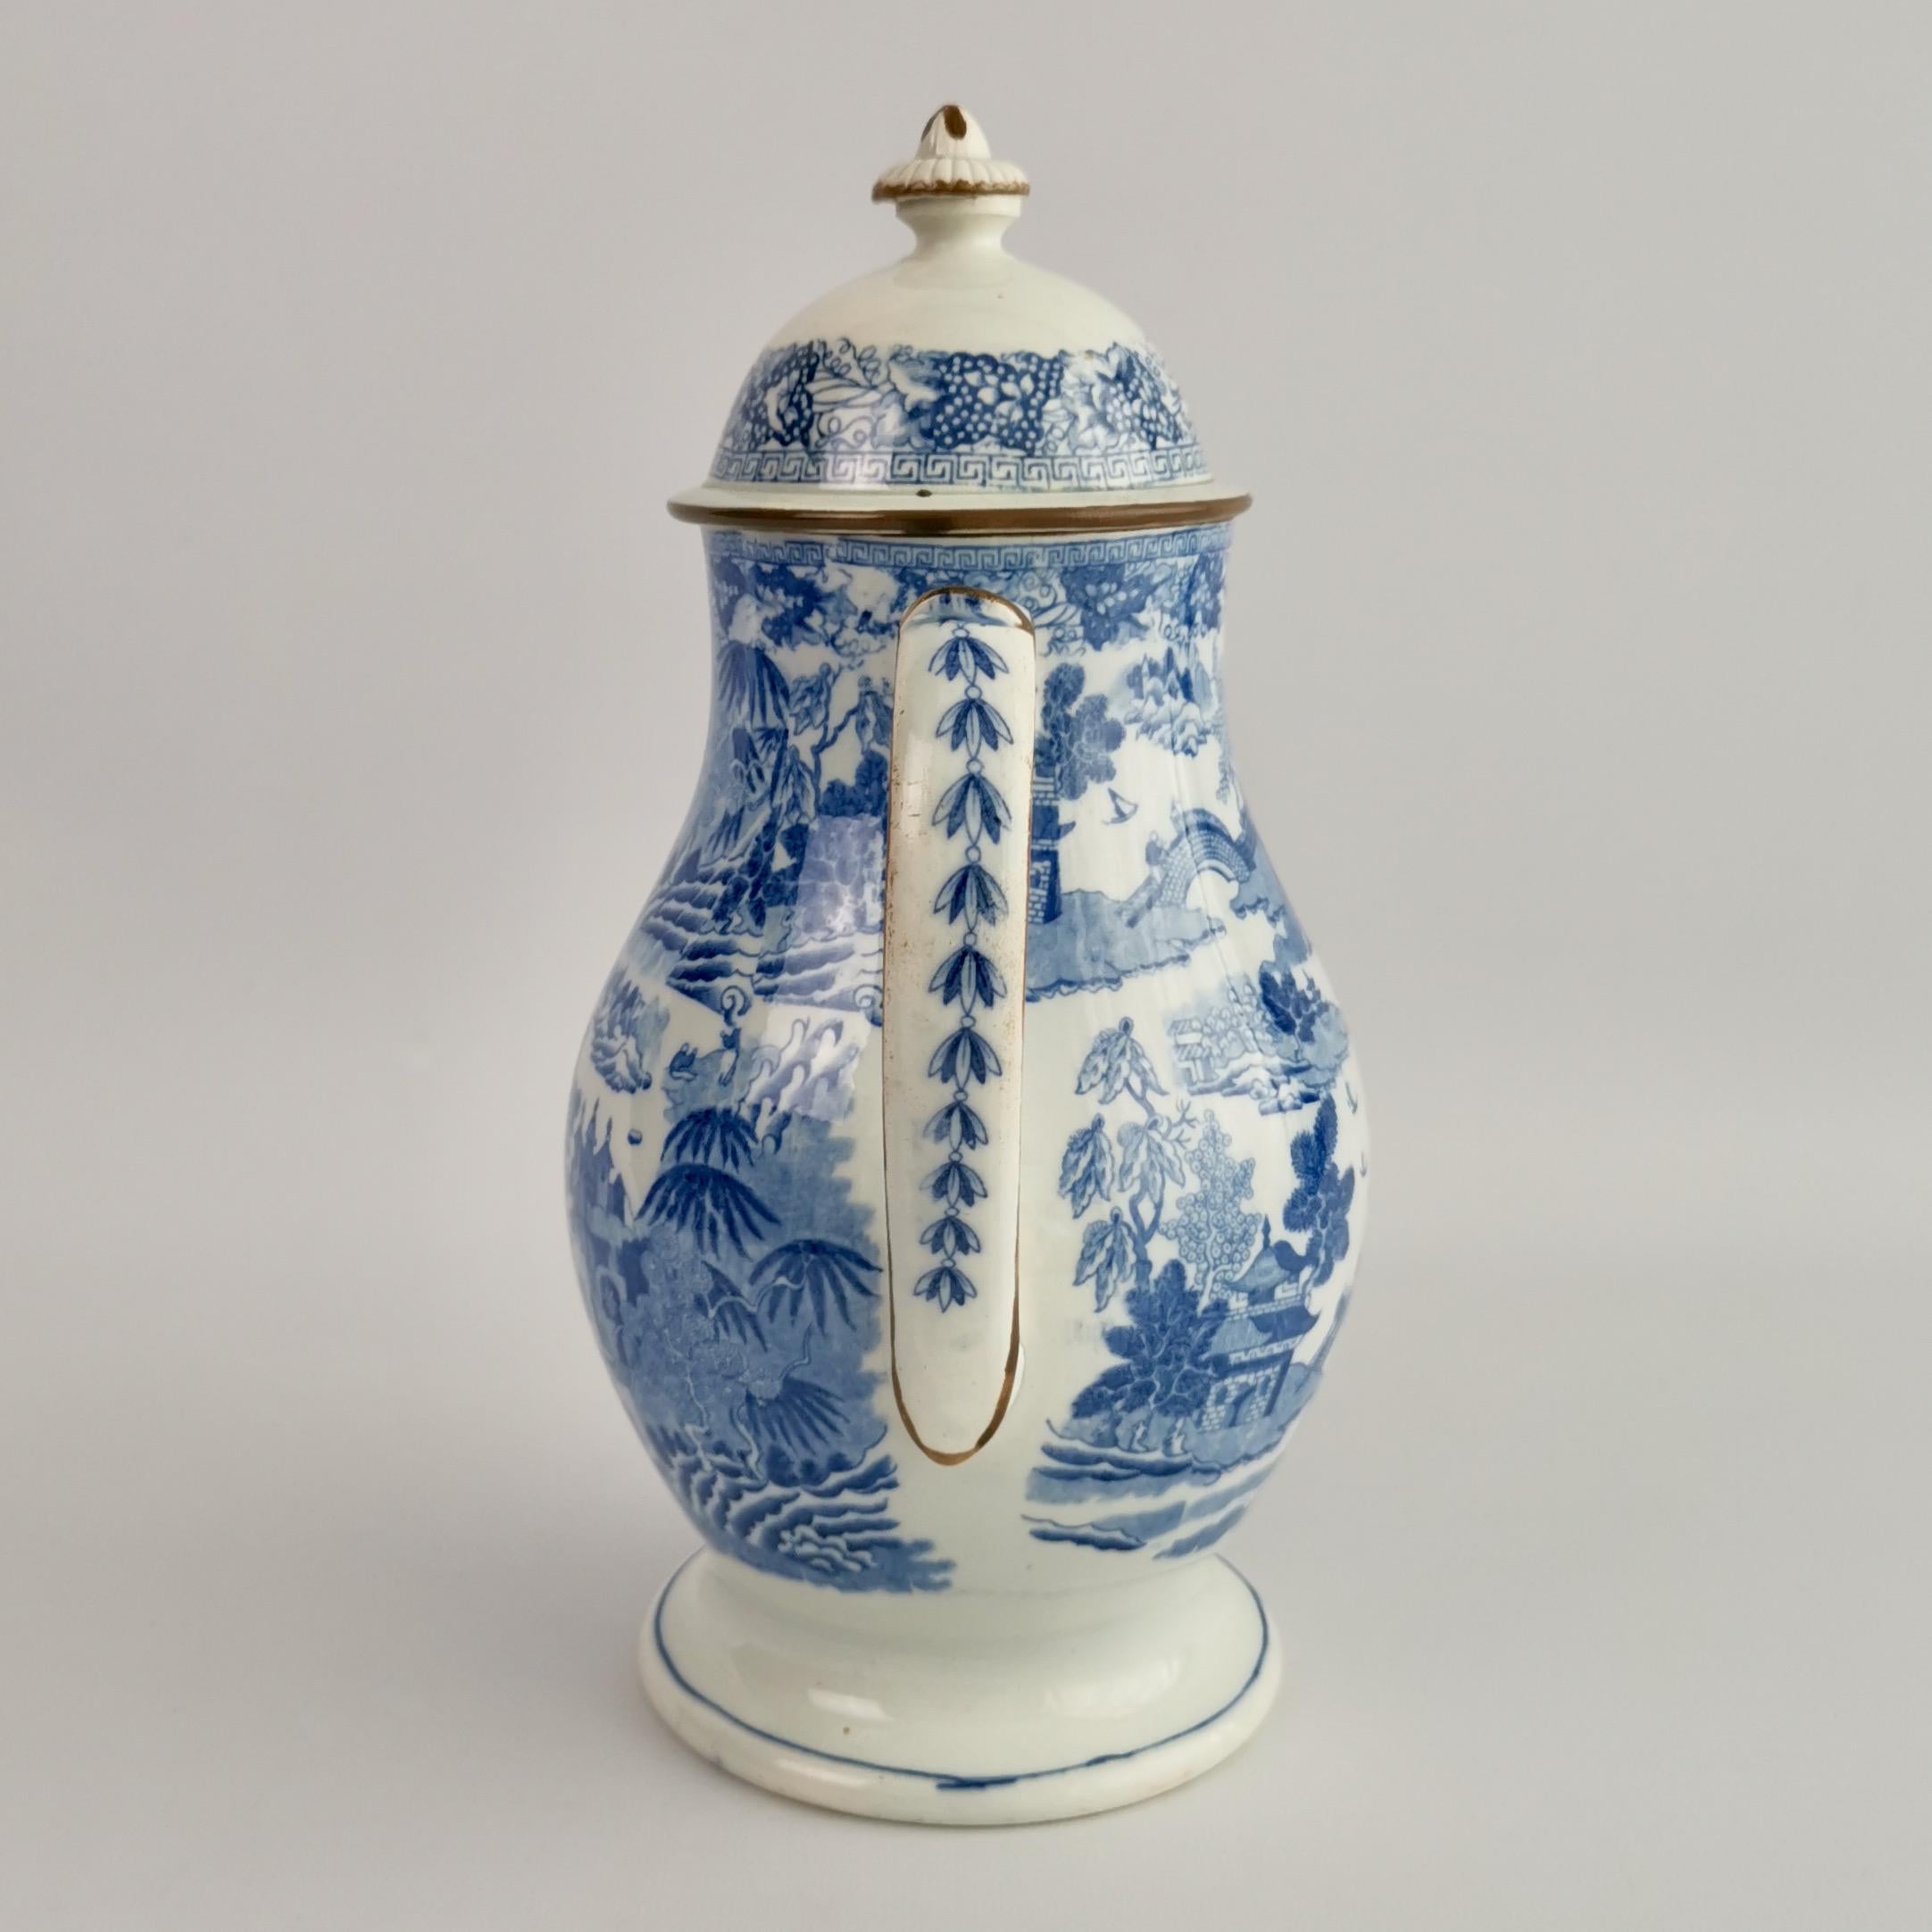 Regency Rathbone Pearlware Coffee Pot, Pagoda Pattern Blue and White, ca 1815